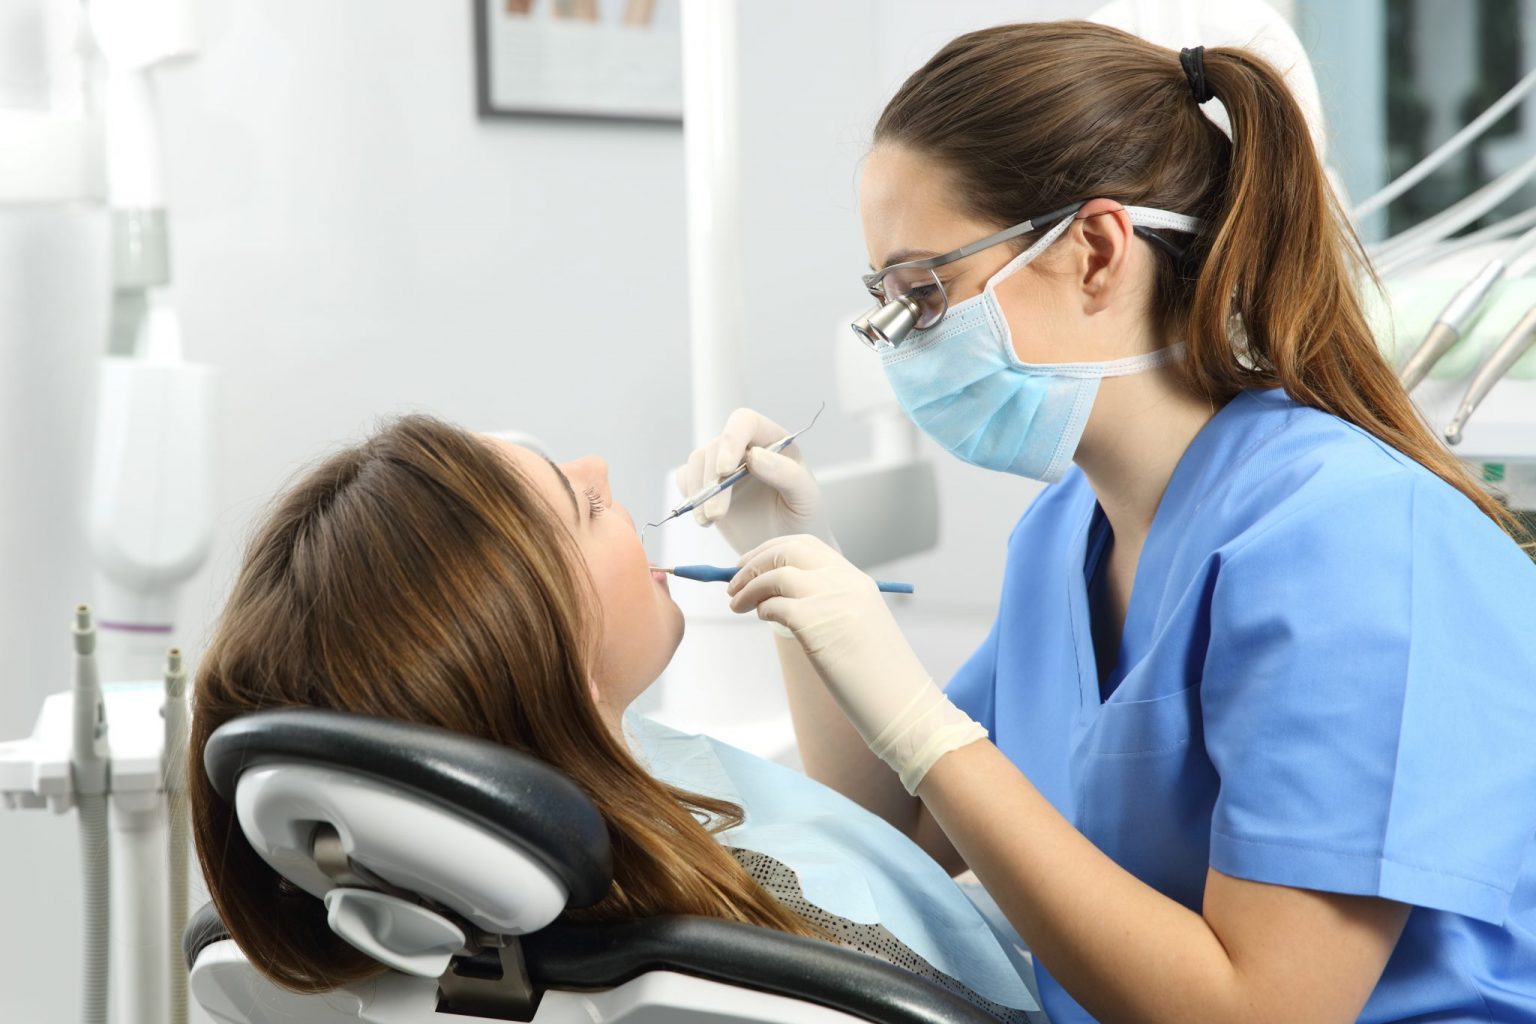 Dentist Examining A Patient Teeth 810206880 5004x3336.jpeg